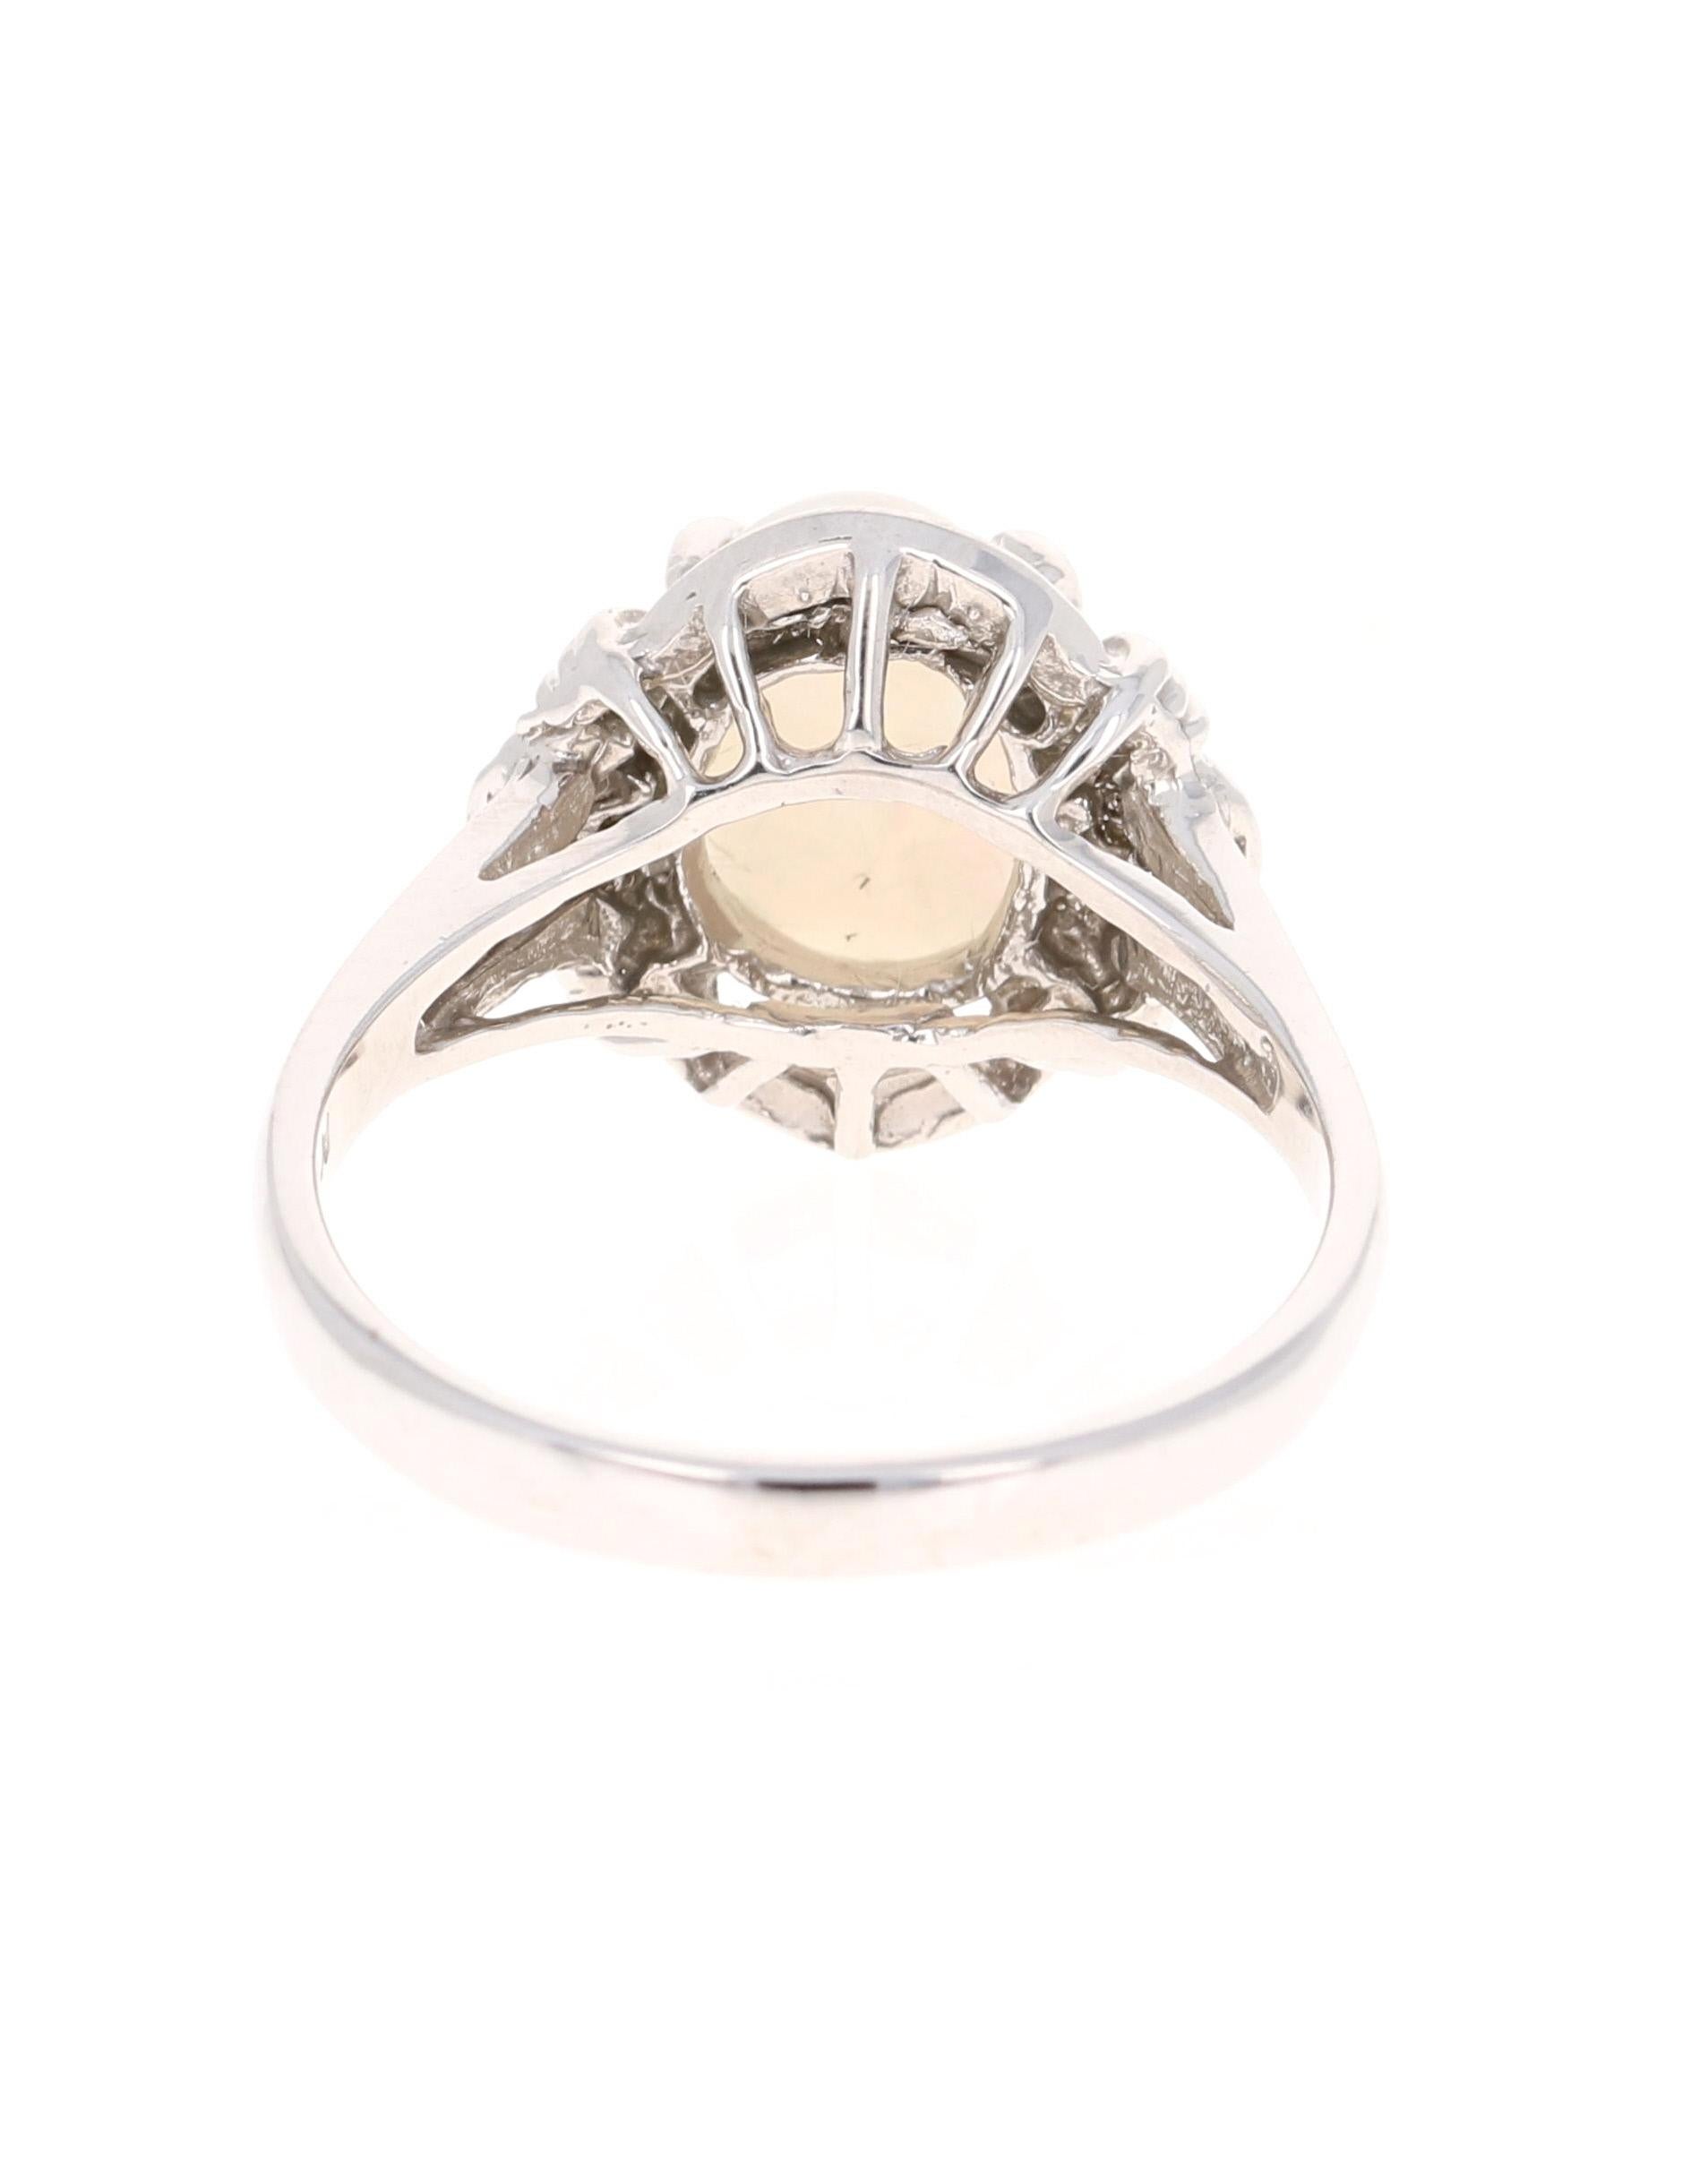 Oval Cut 0.97 Carat Opal Diamond 14 Karat White Gold Ring